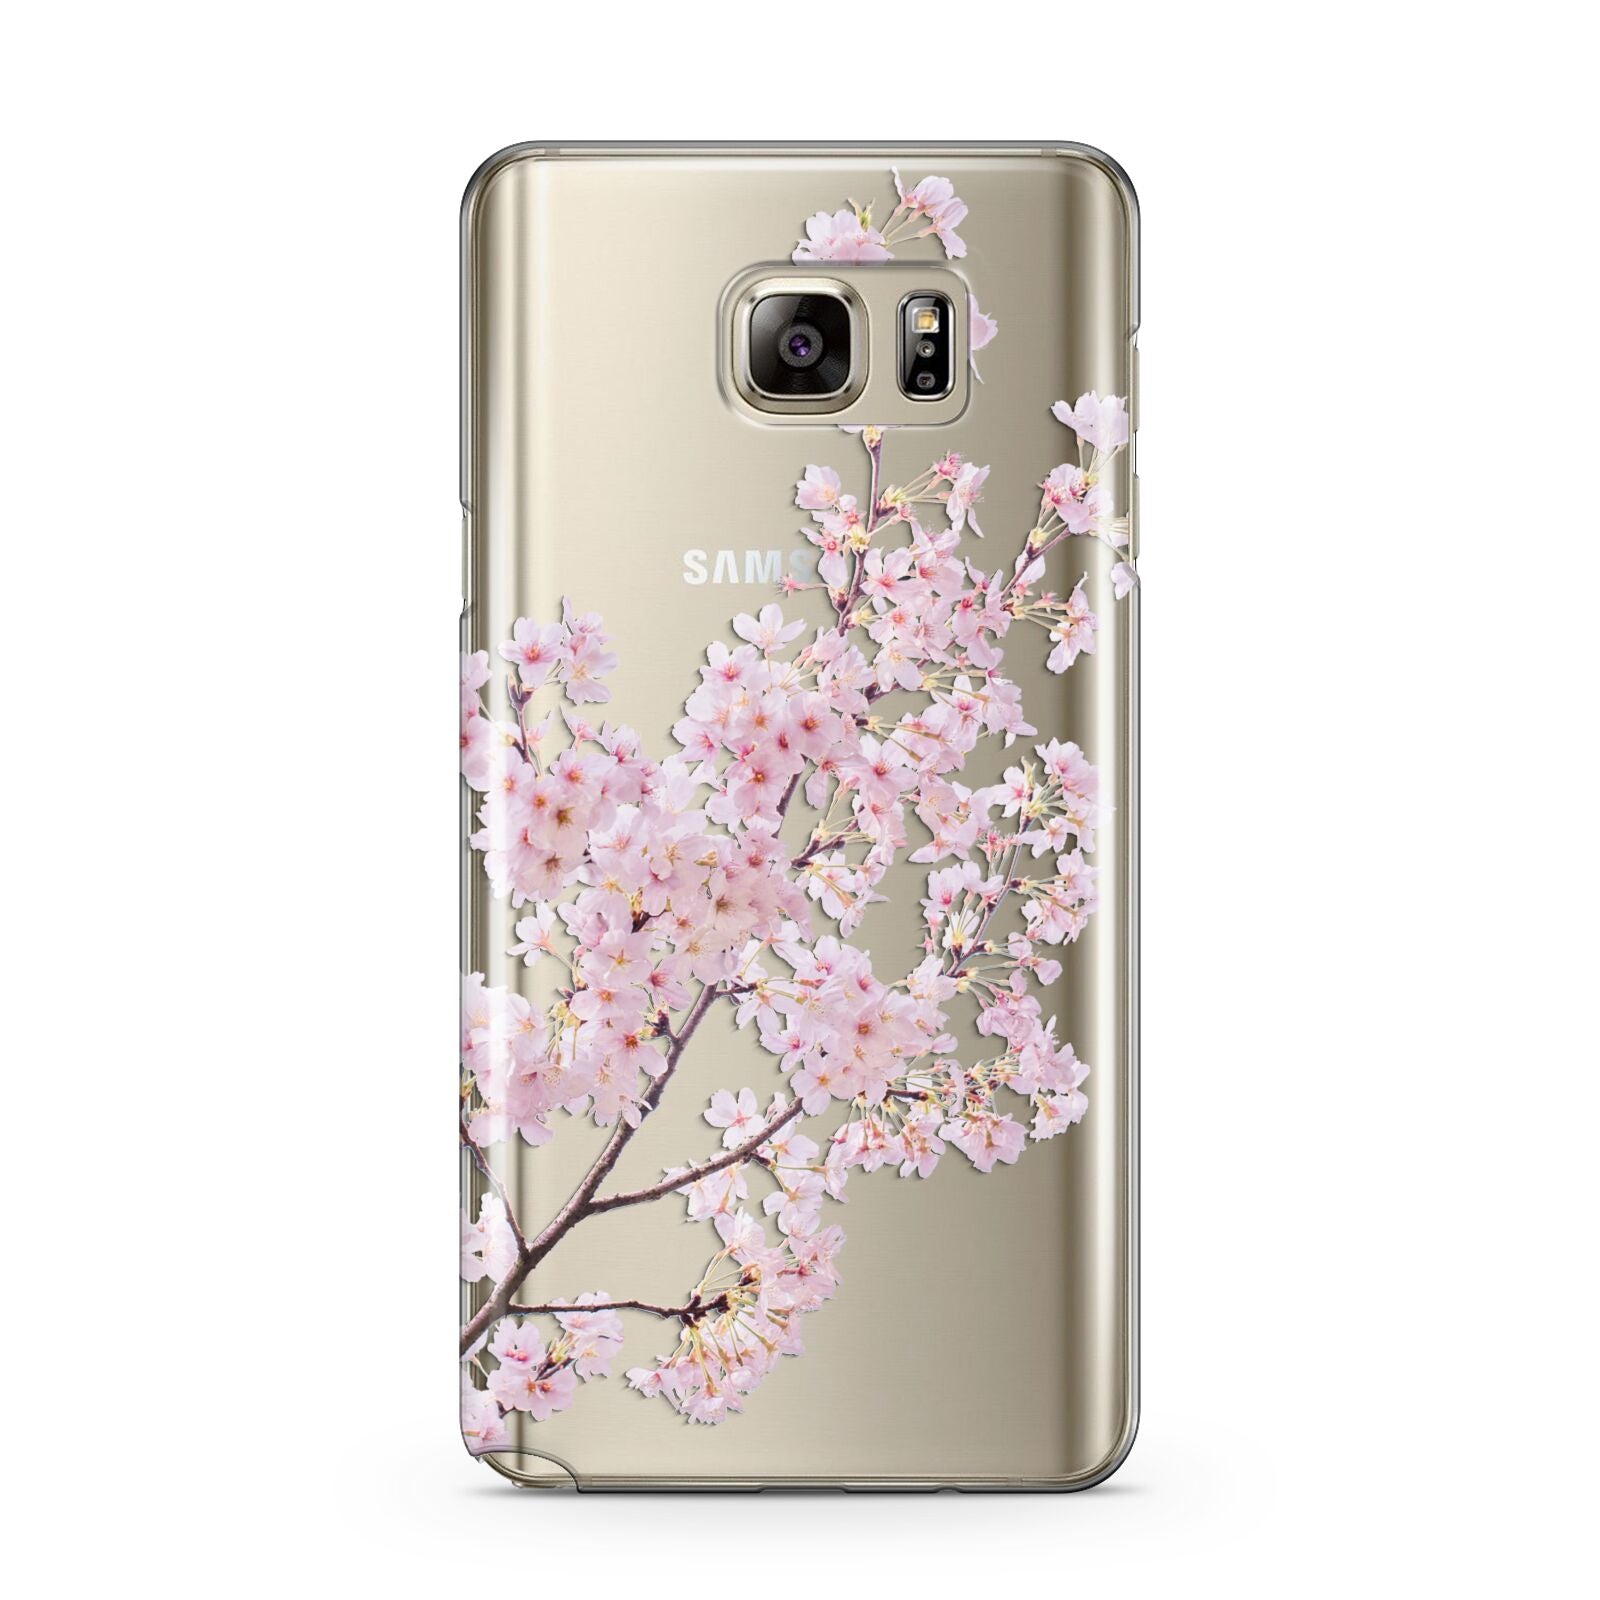 Blossom Tree Samsung Galaxy Note 5 Case